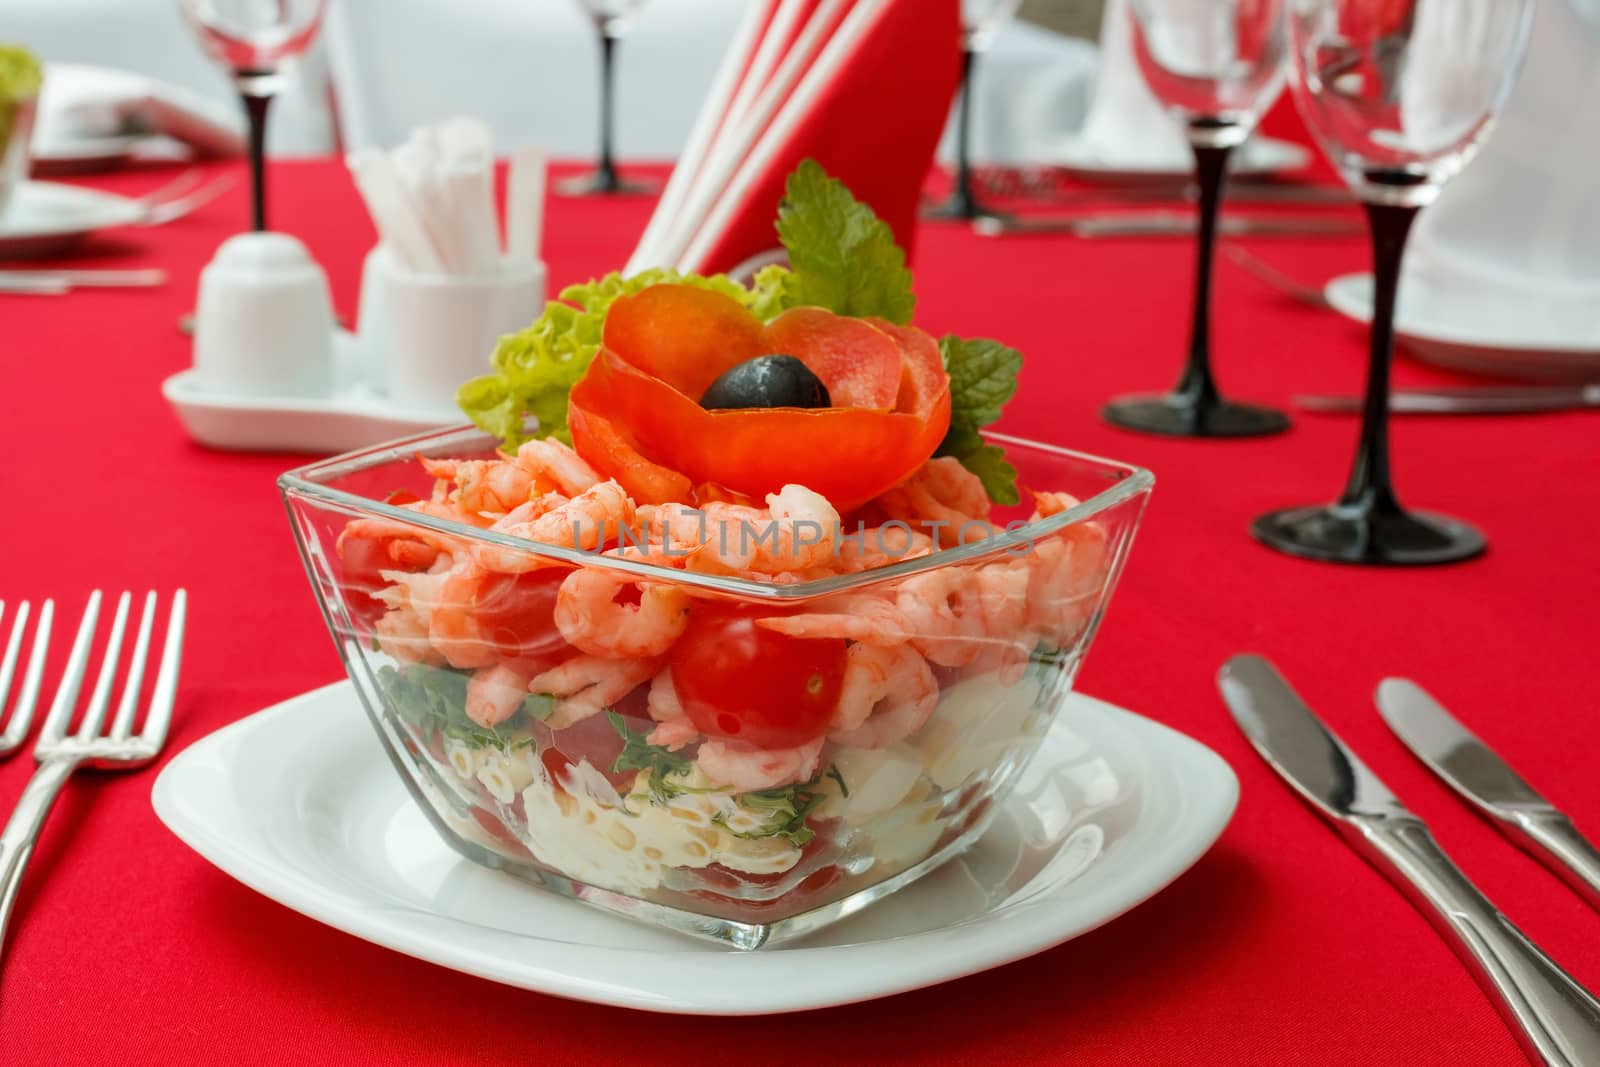 Salad with shrimps and vegetables by fogen